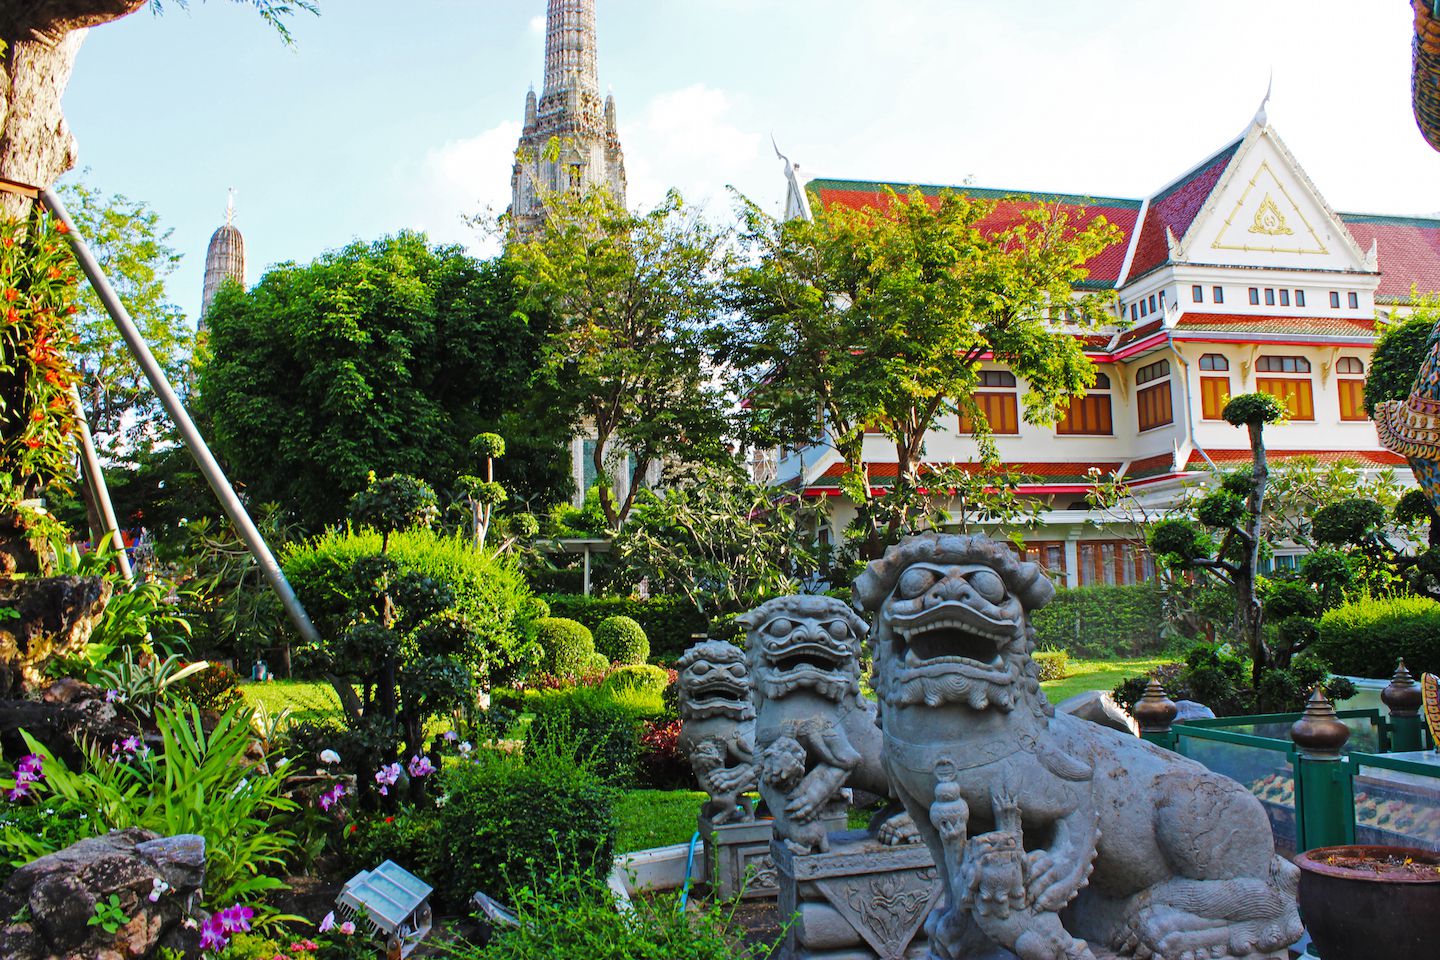 Lions statues at Wat Khruawan Worawihan